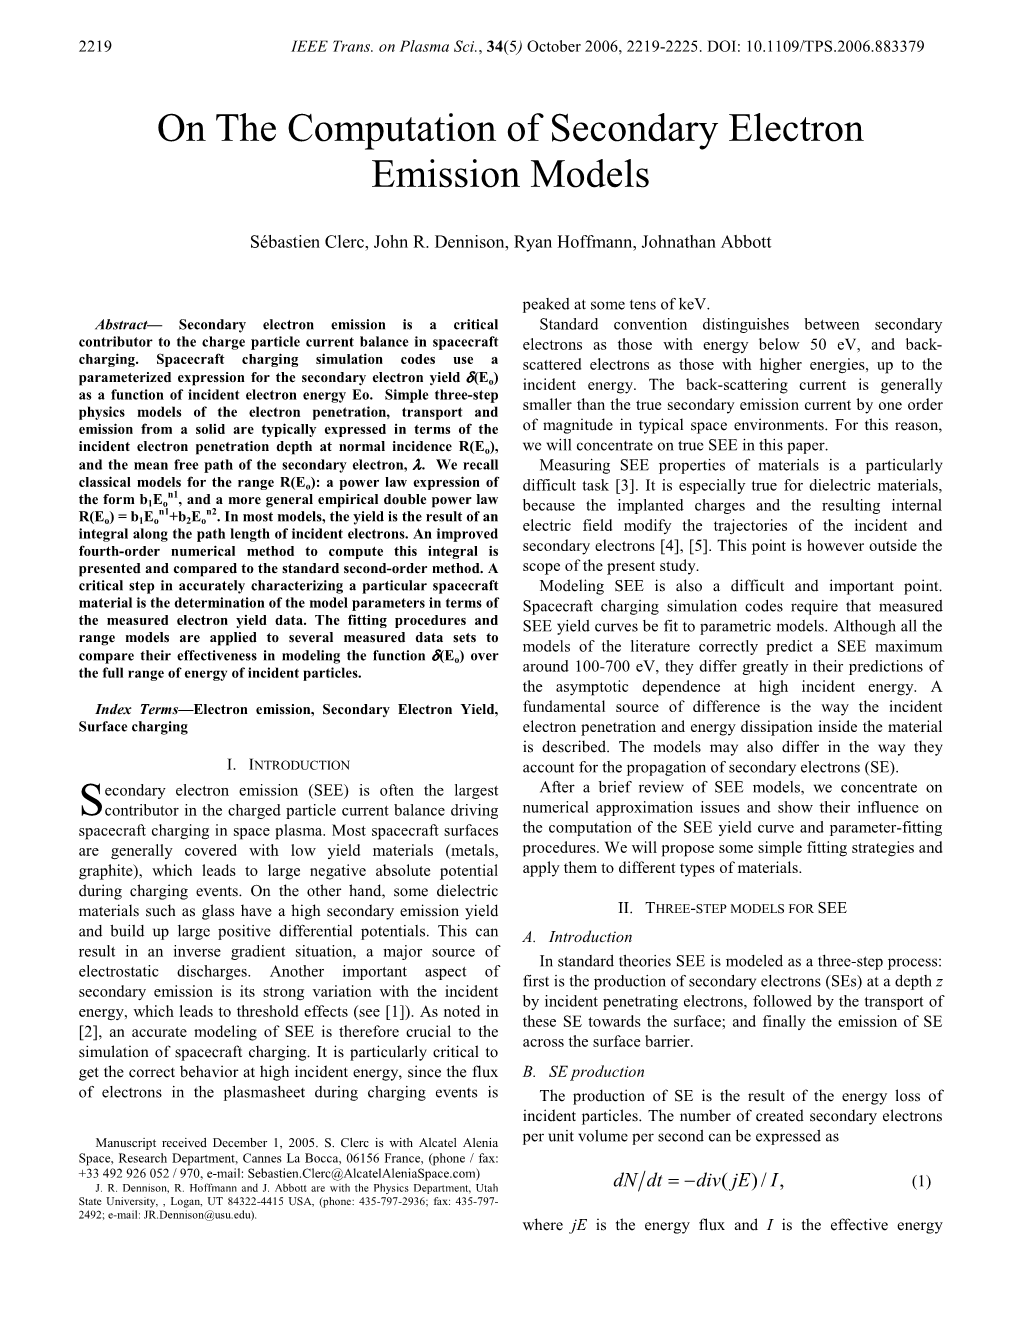 On the Computation of Secondary Electron Emission Models